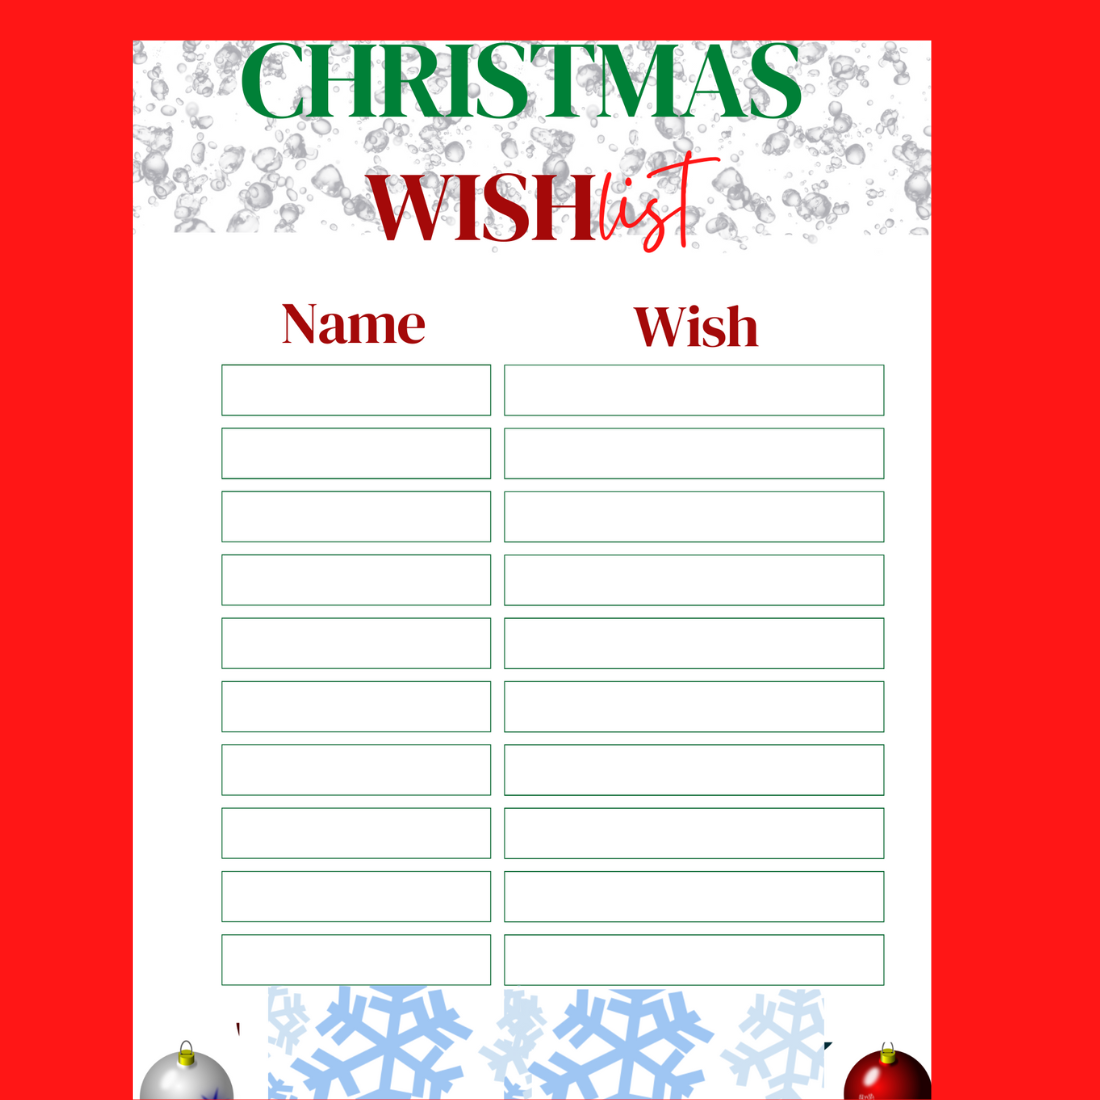 Christmas Wish List Design Template - MasterBundles